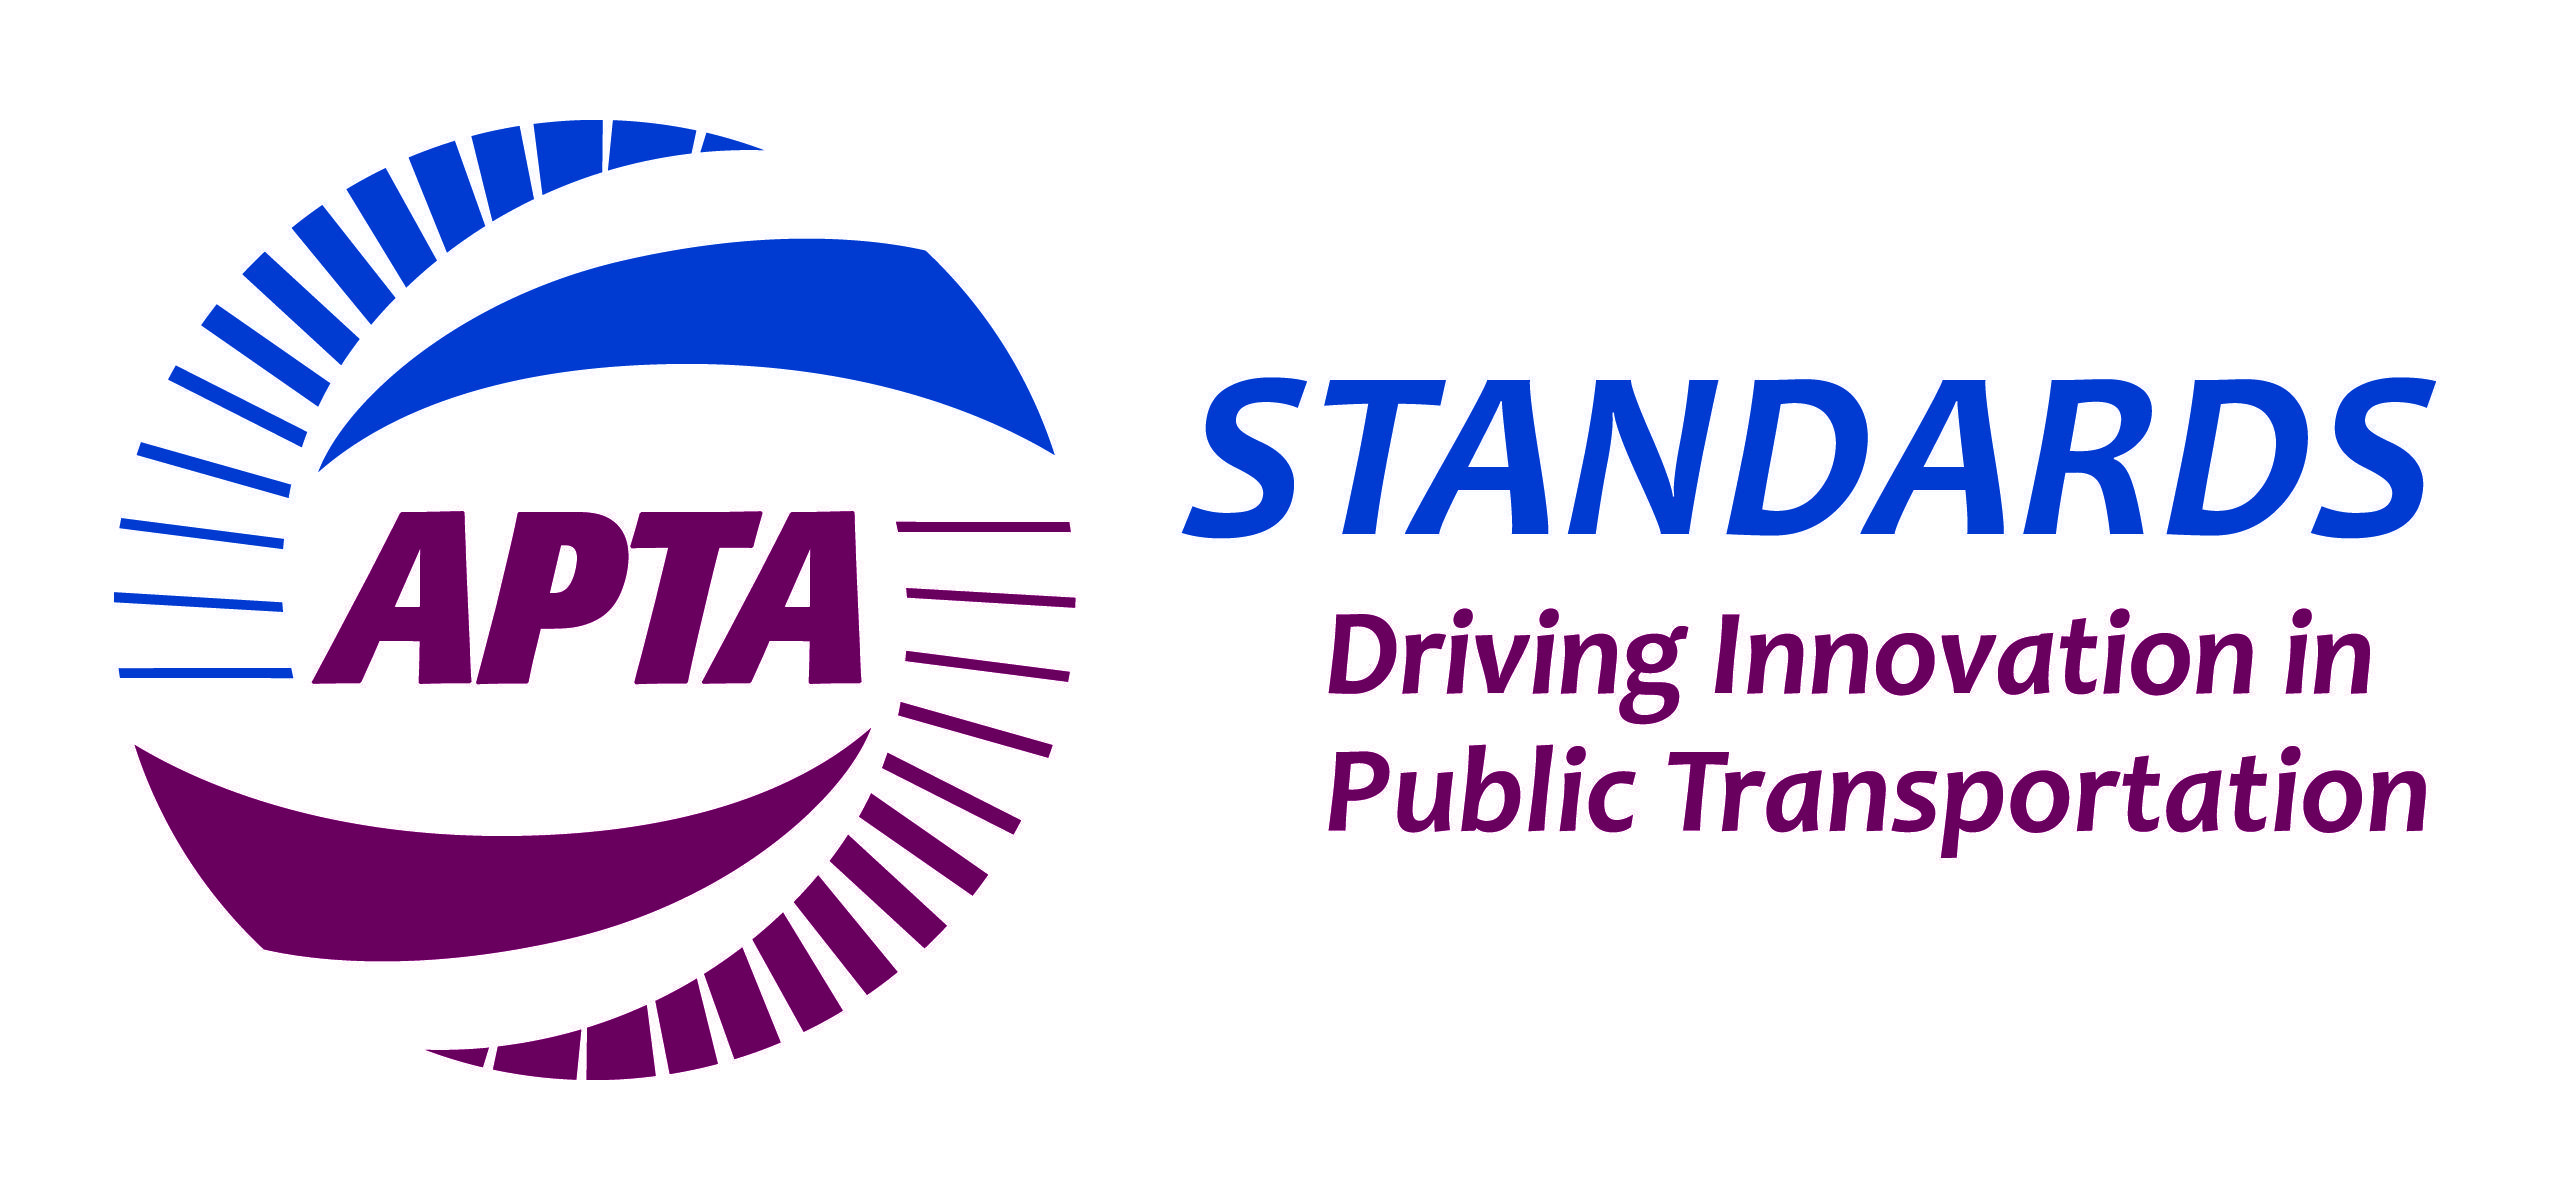 APTA Logo - APTA Published Standards